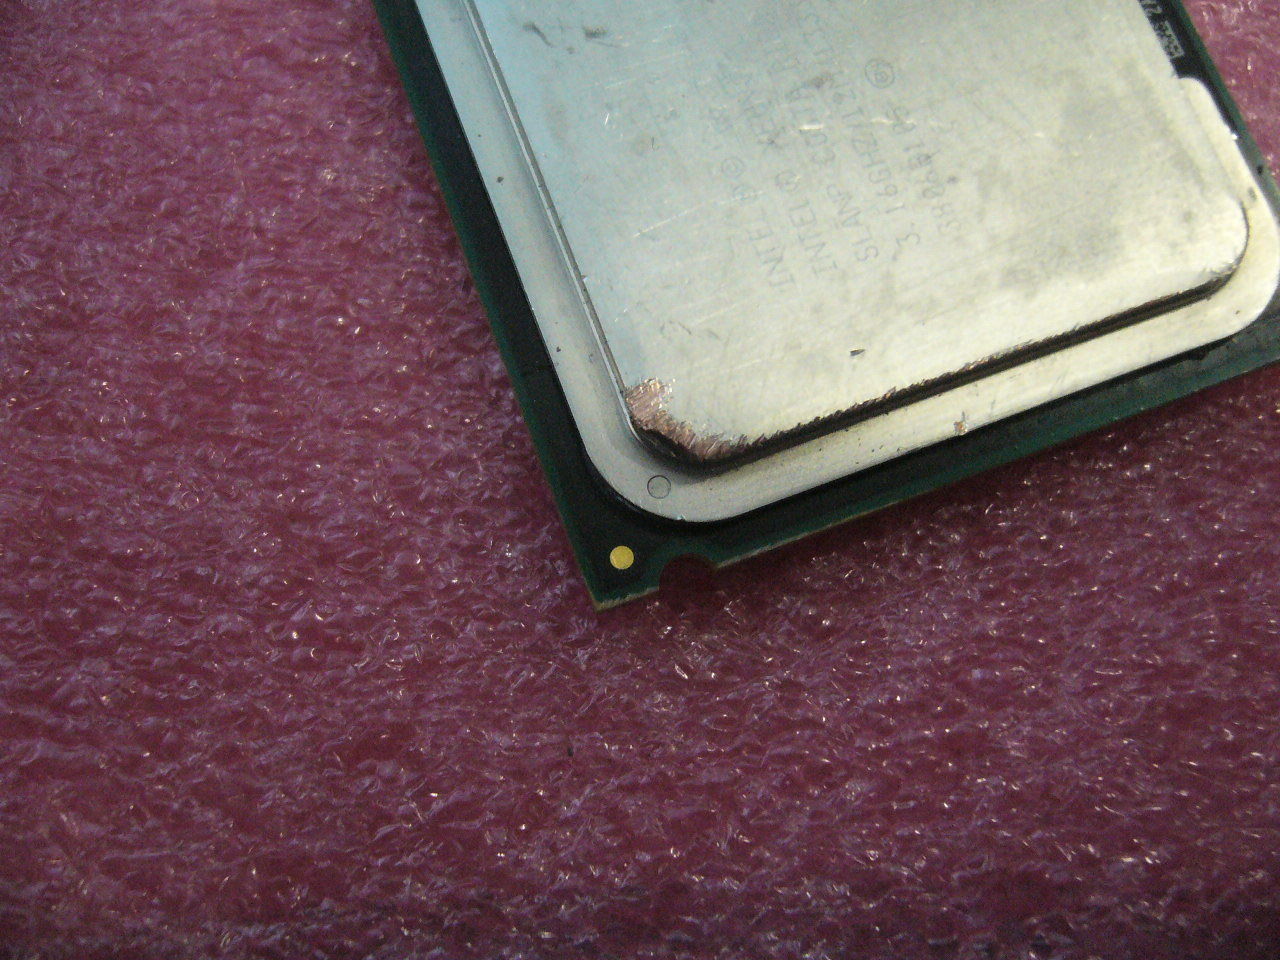 QTY 1x Intel Xeon CPU Quad Core X5460 3.16Ghz/12MB/1333Mhz LGA771 SLANP - zum Schließen ins Bild klicken